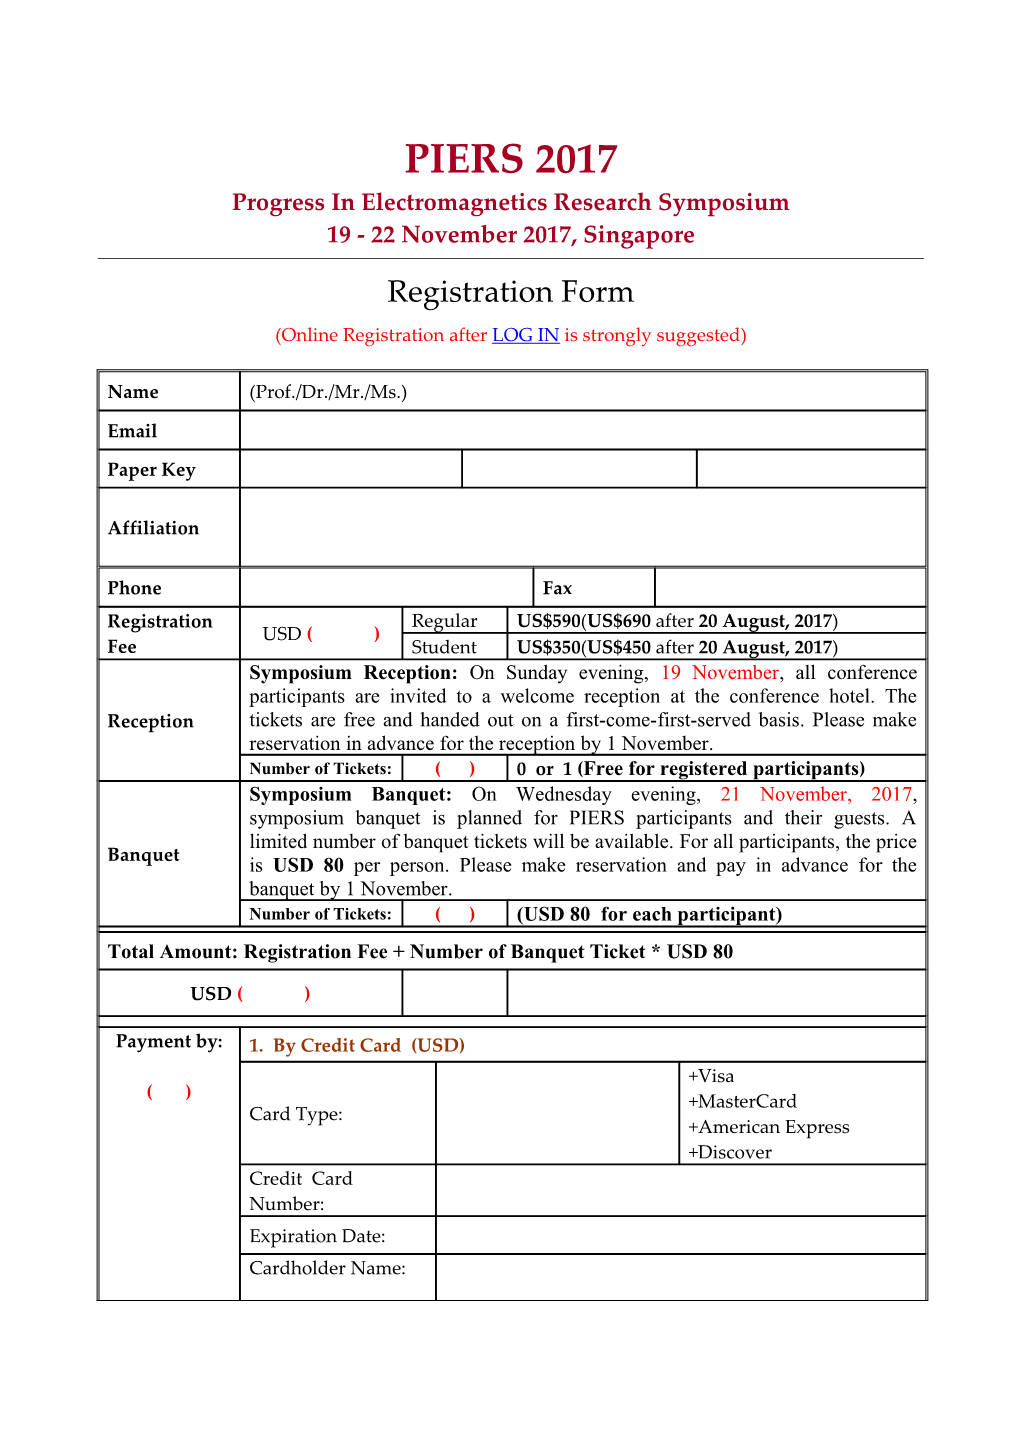 PIERS2007 in Prague, Registration Form